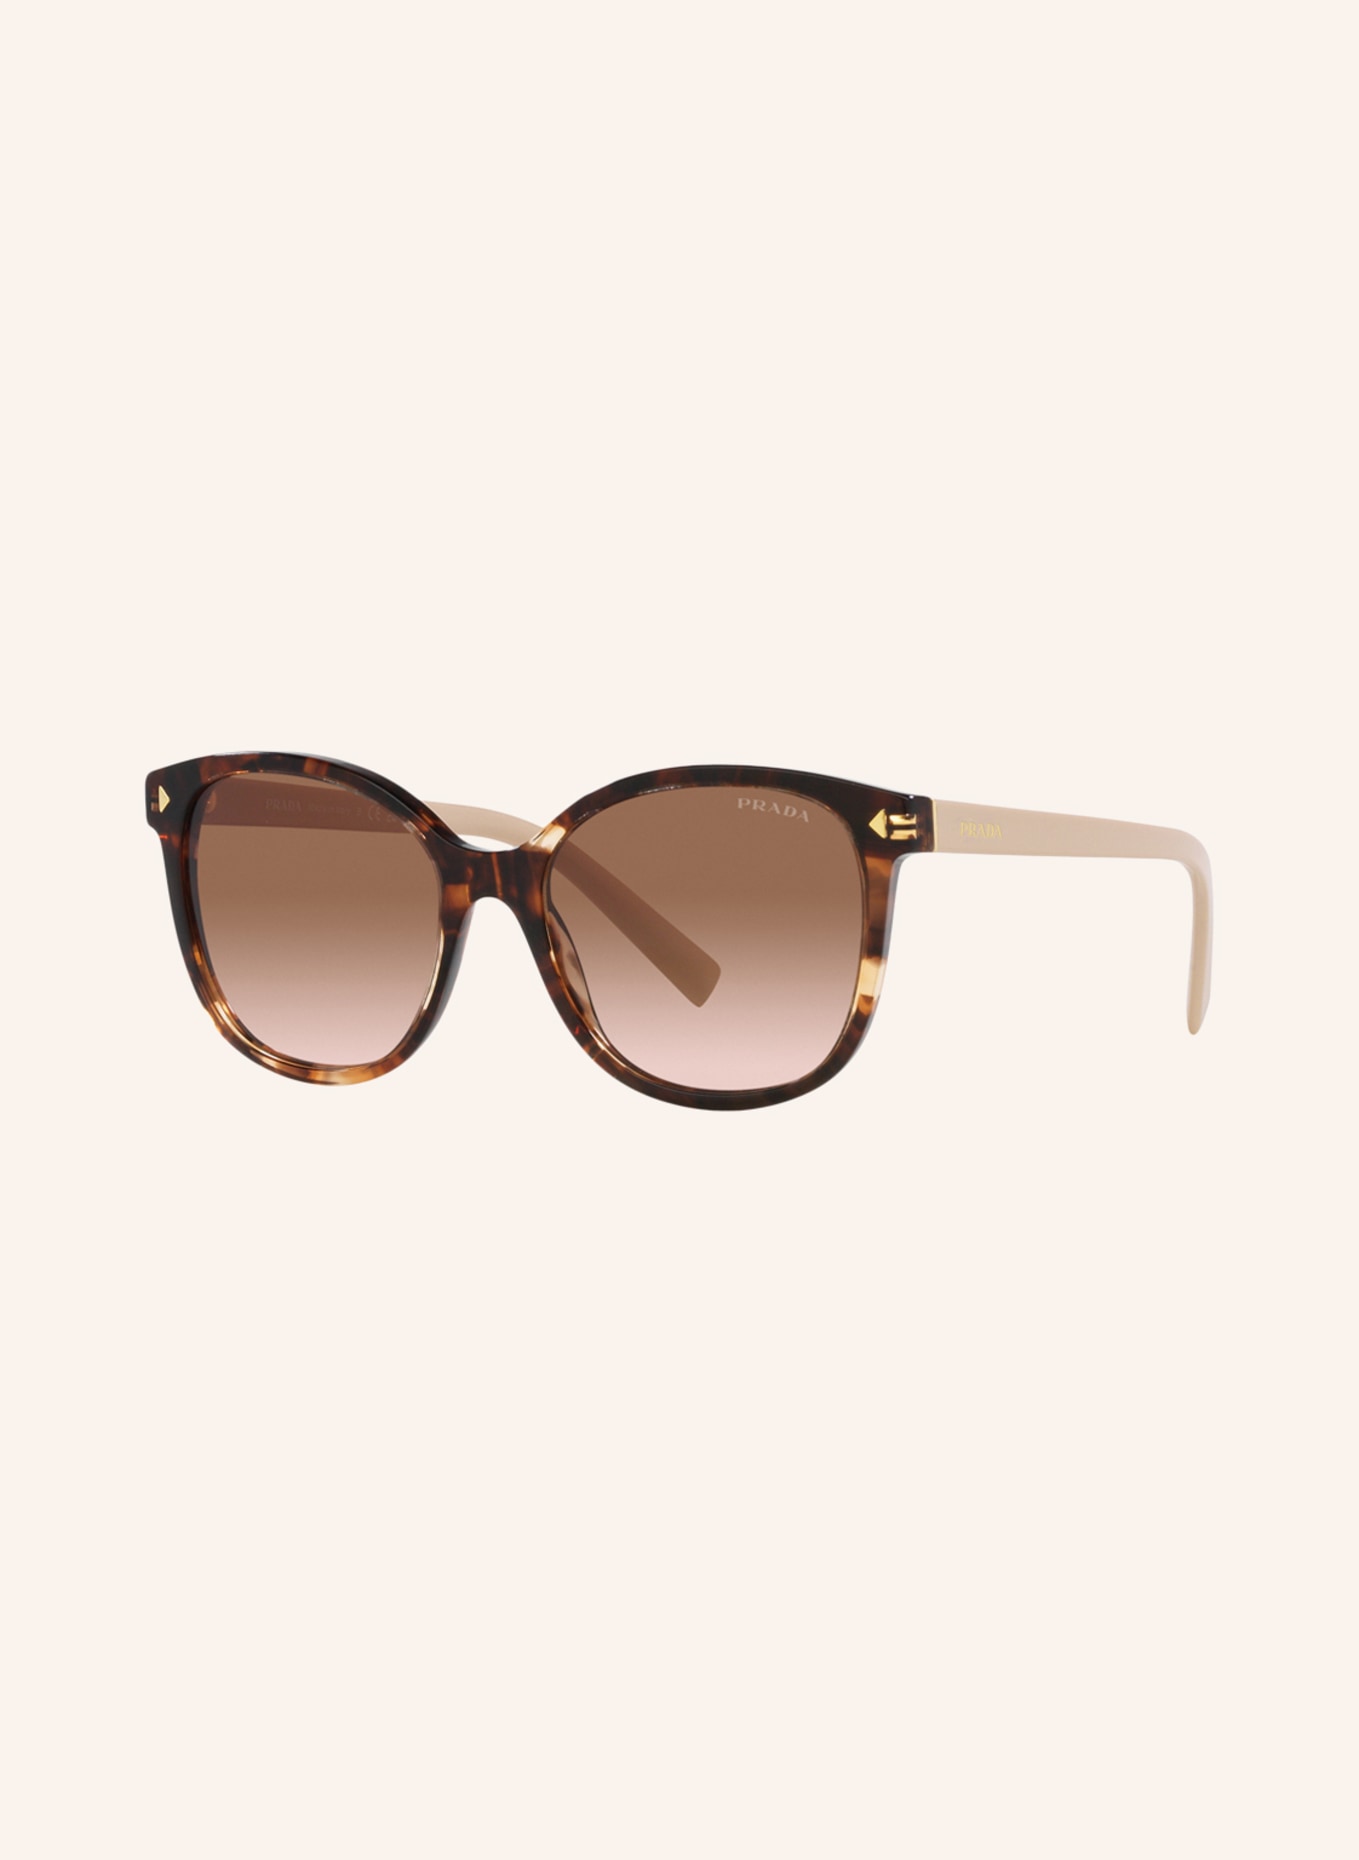 Brand New Prada Sunglasses PR 17WS 2AU 8C1 Havana/Brown For Women | eBay